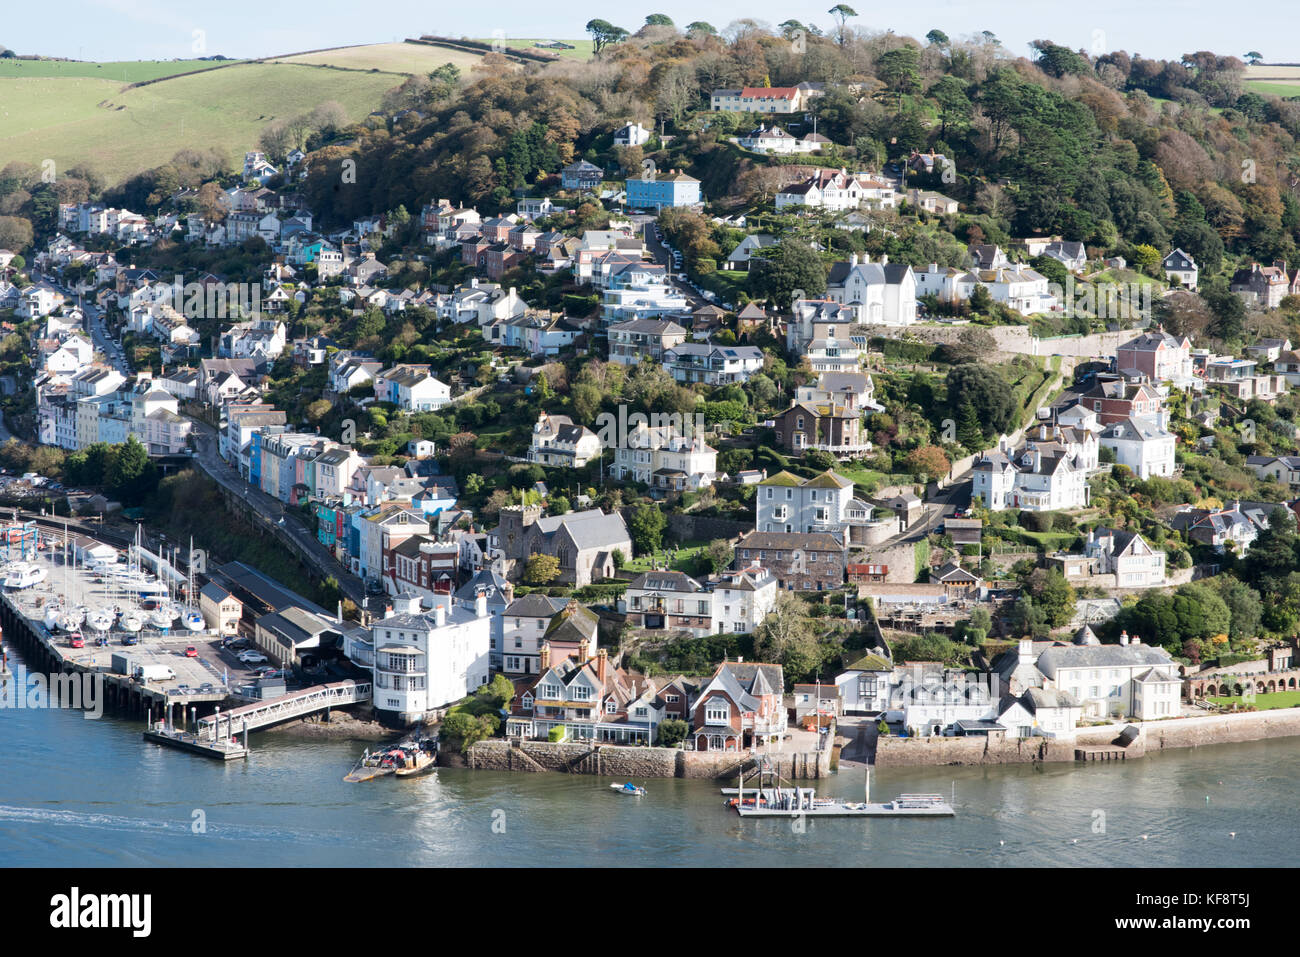 View looking down on Kingswear, on the River Dart in Devon, England, UK Stock Photo